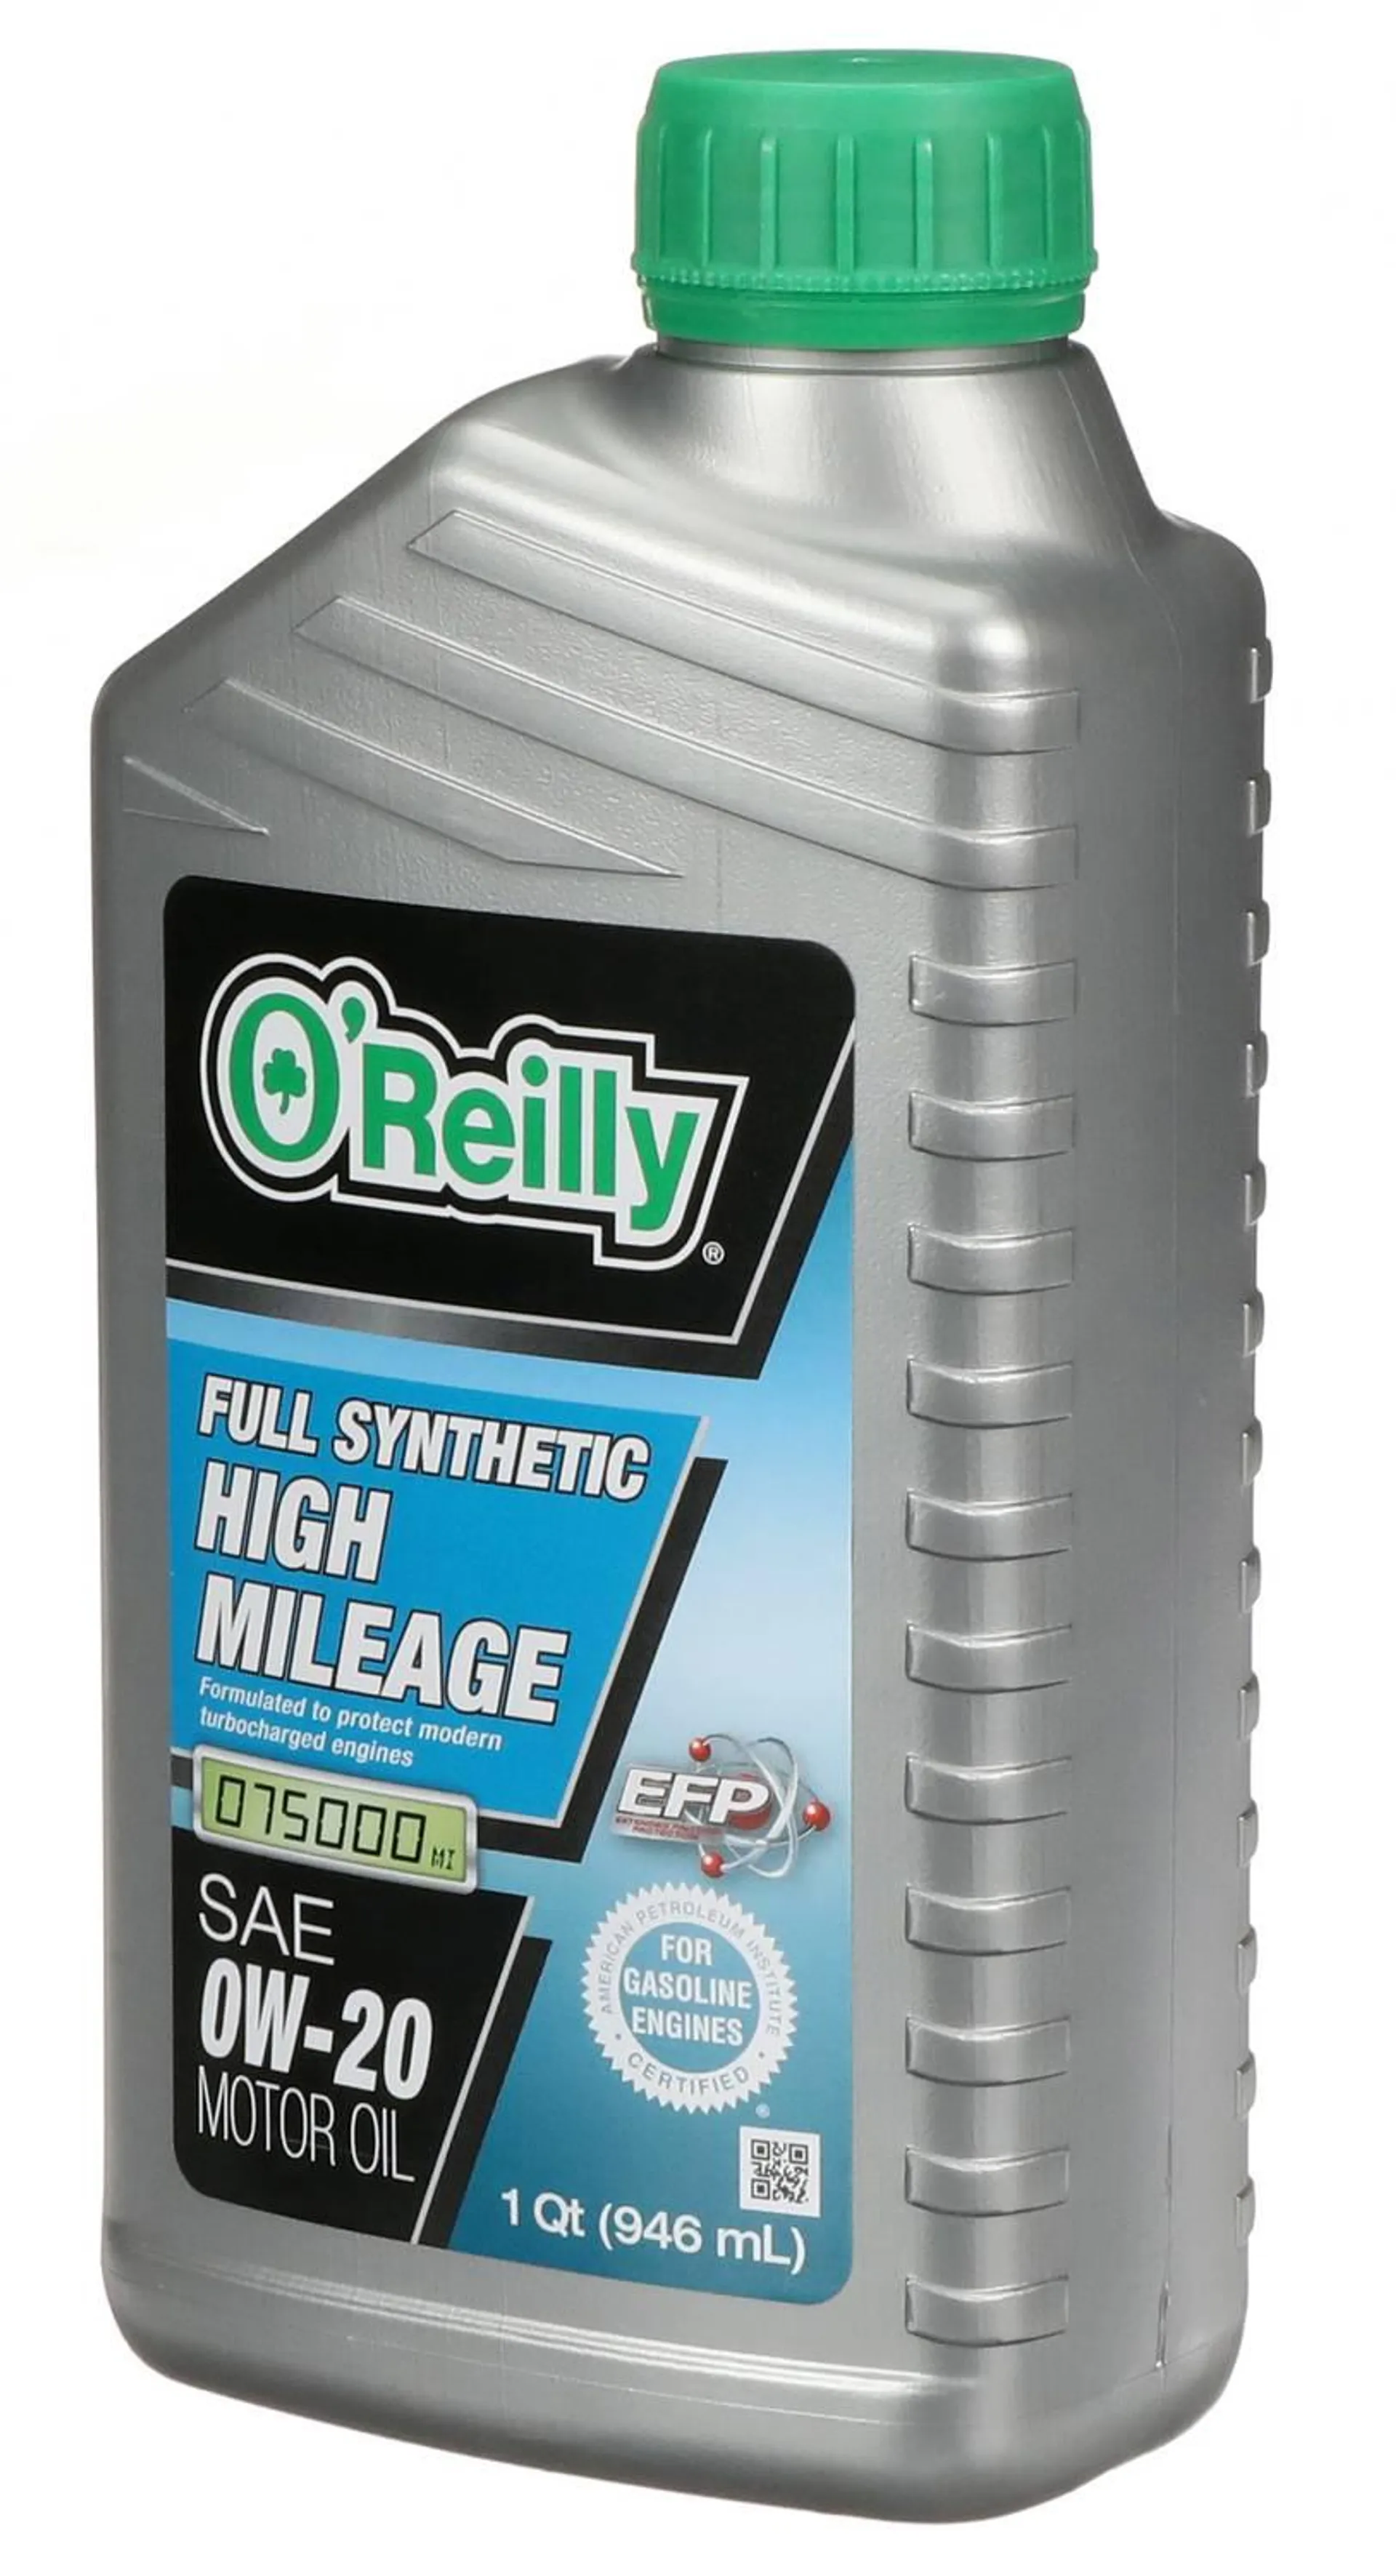 O'Reilly Full Synthetic Motor Oil 0W-20 1 Quart - HI-SYN0-20